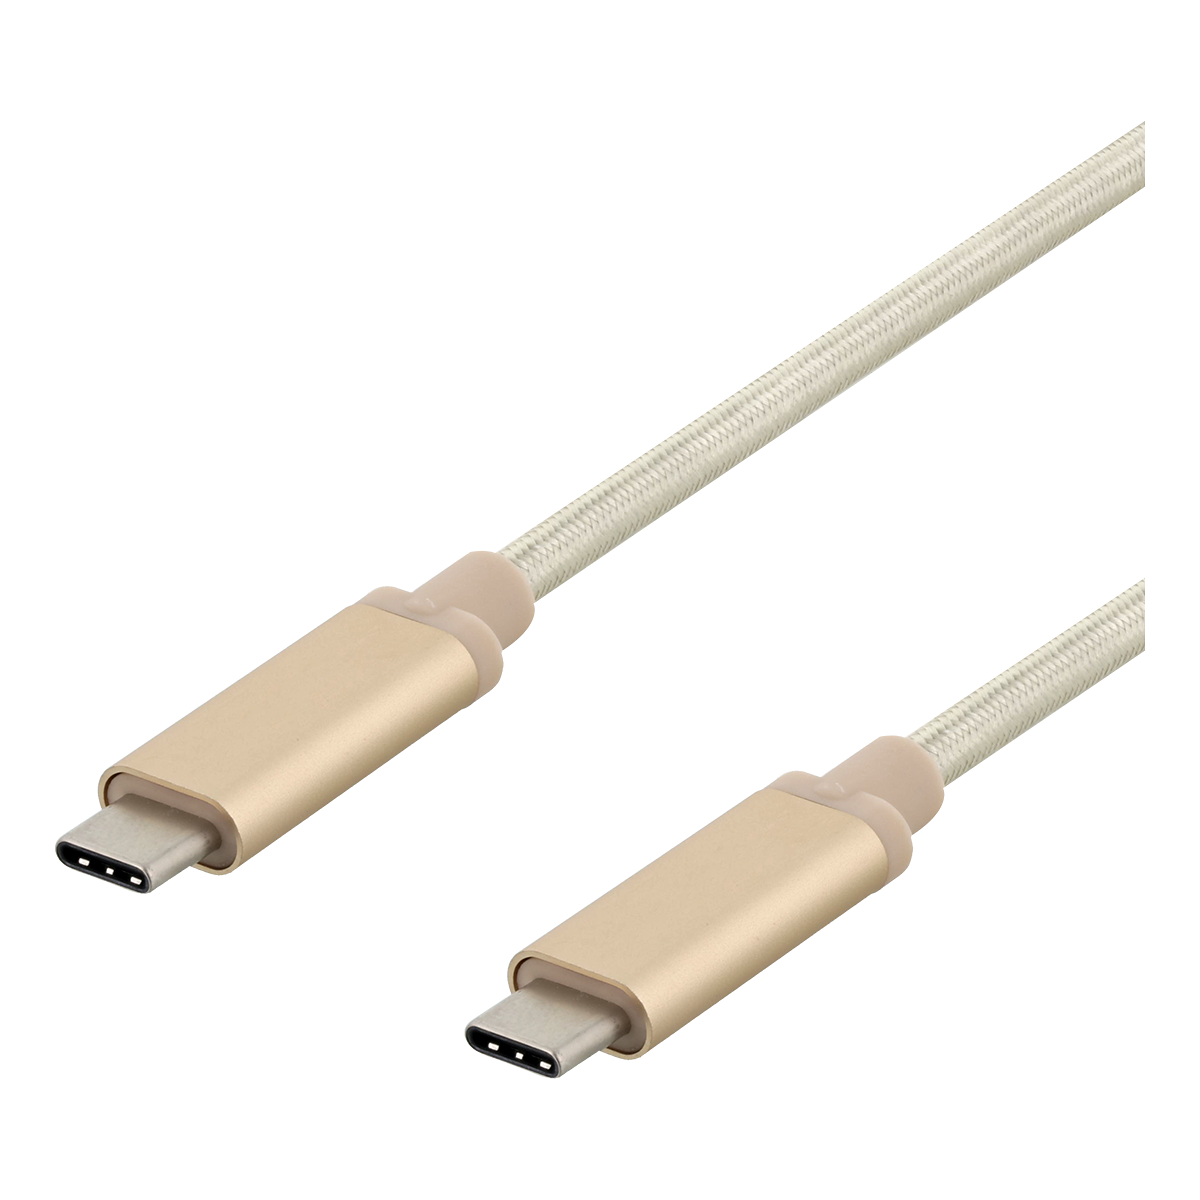 DELTACO USB-C till USB-C-kabel, 1m, 60W USB PD, 10 Gbps, guld